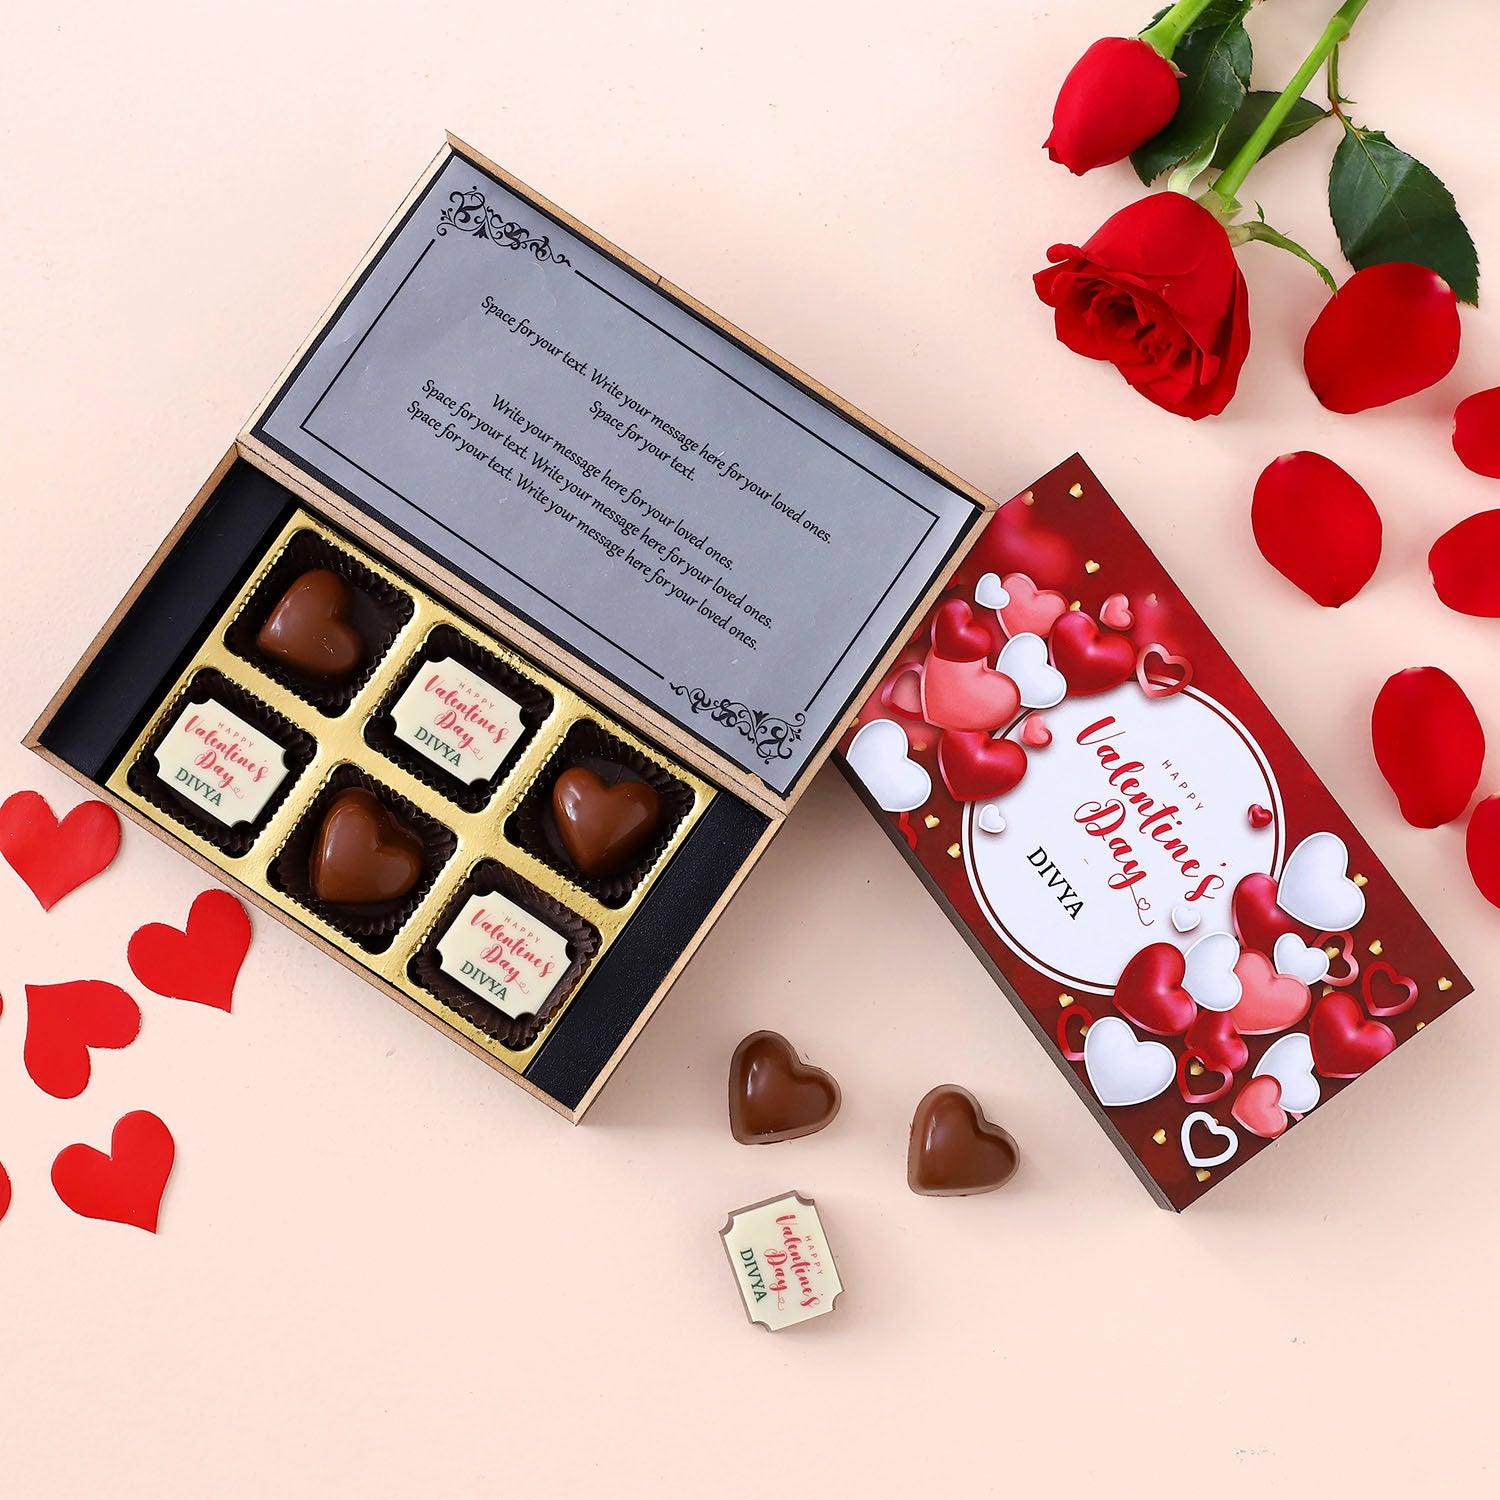 Full Of Hearts & Love Personalised Chocolate Box - Choco Manual ART